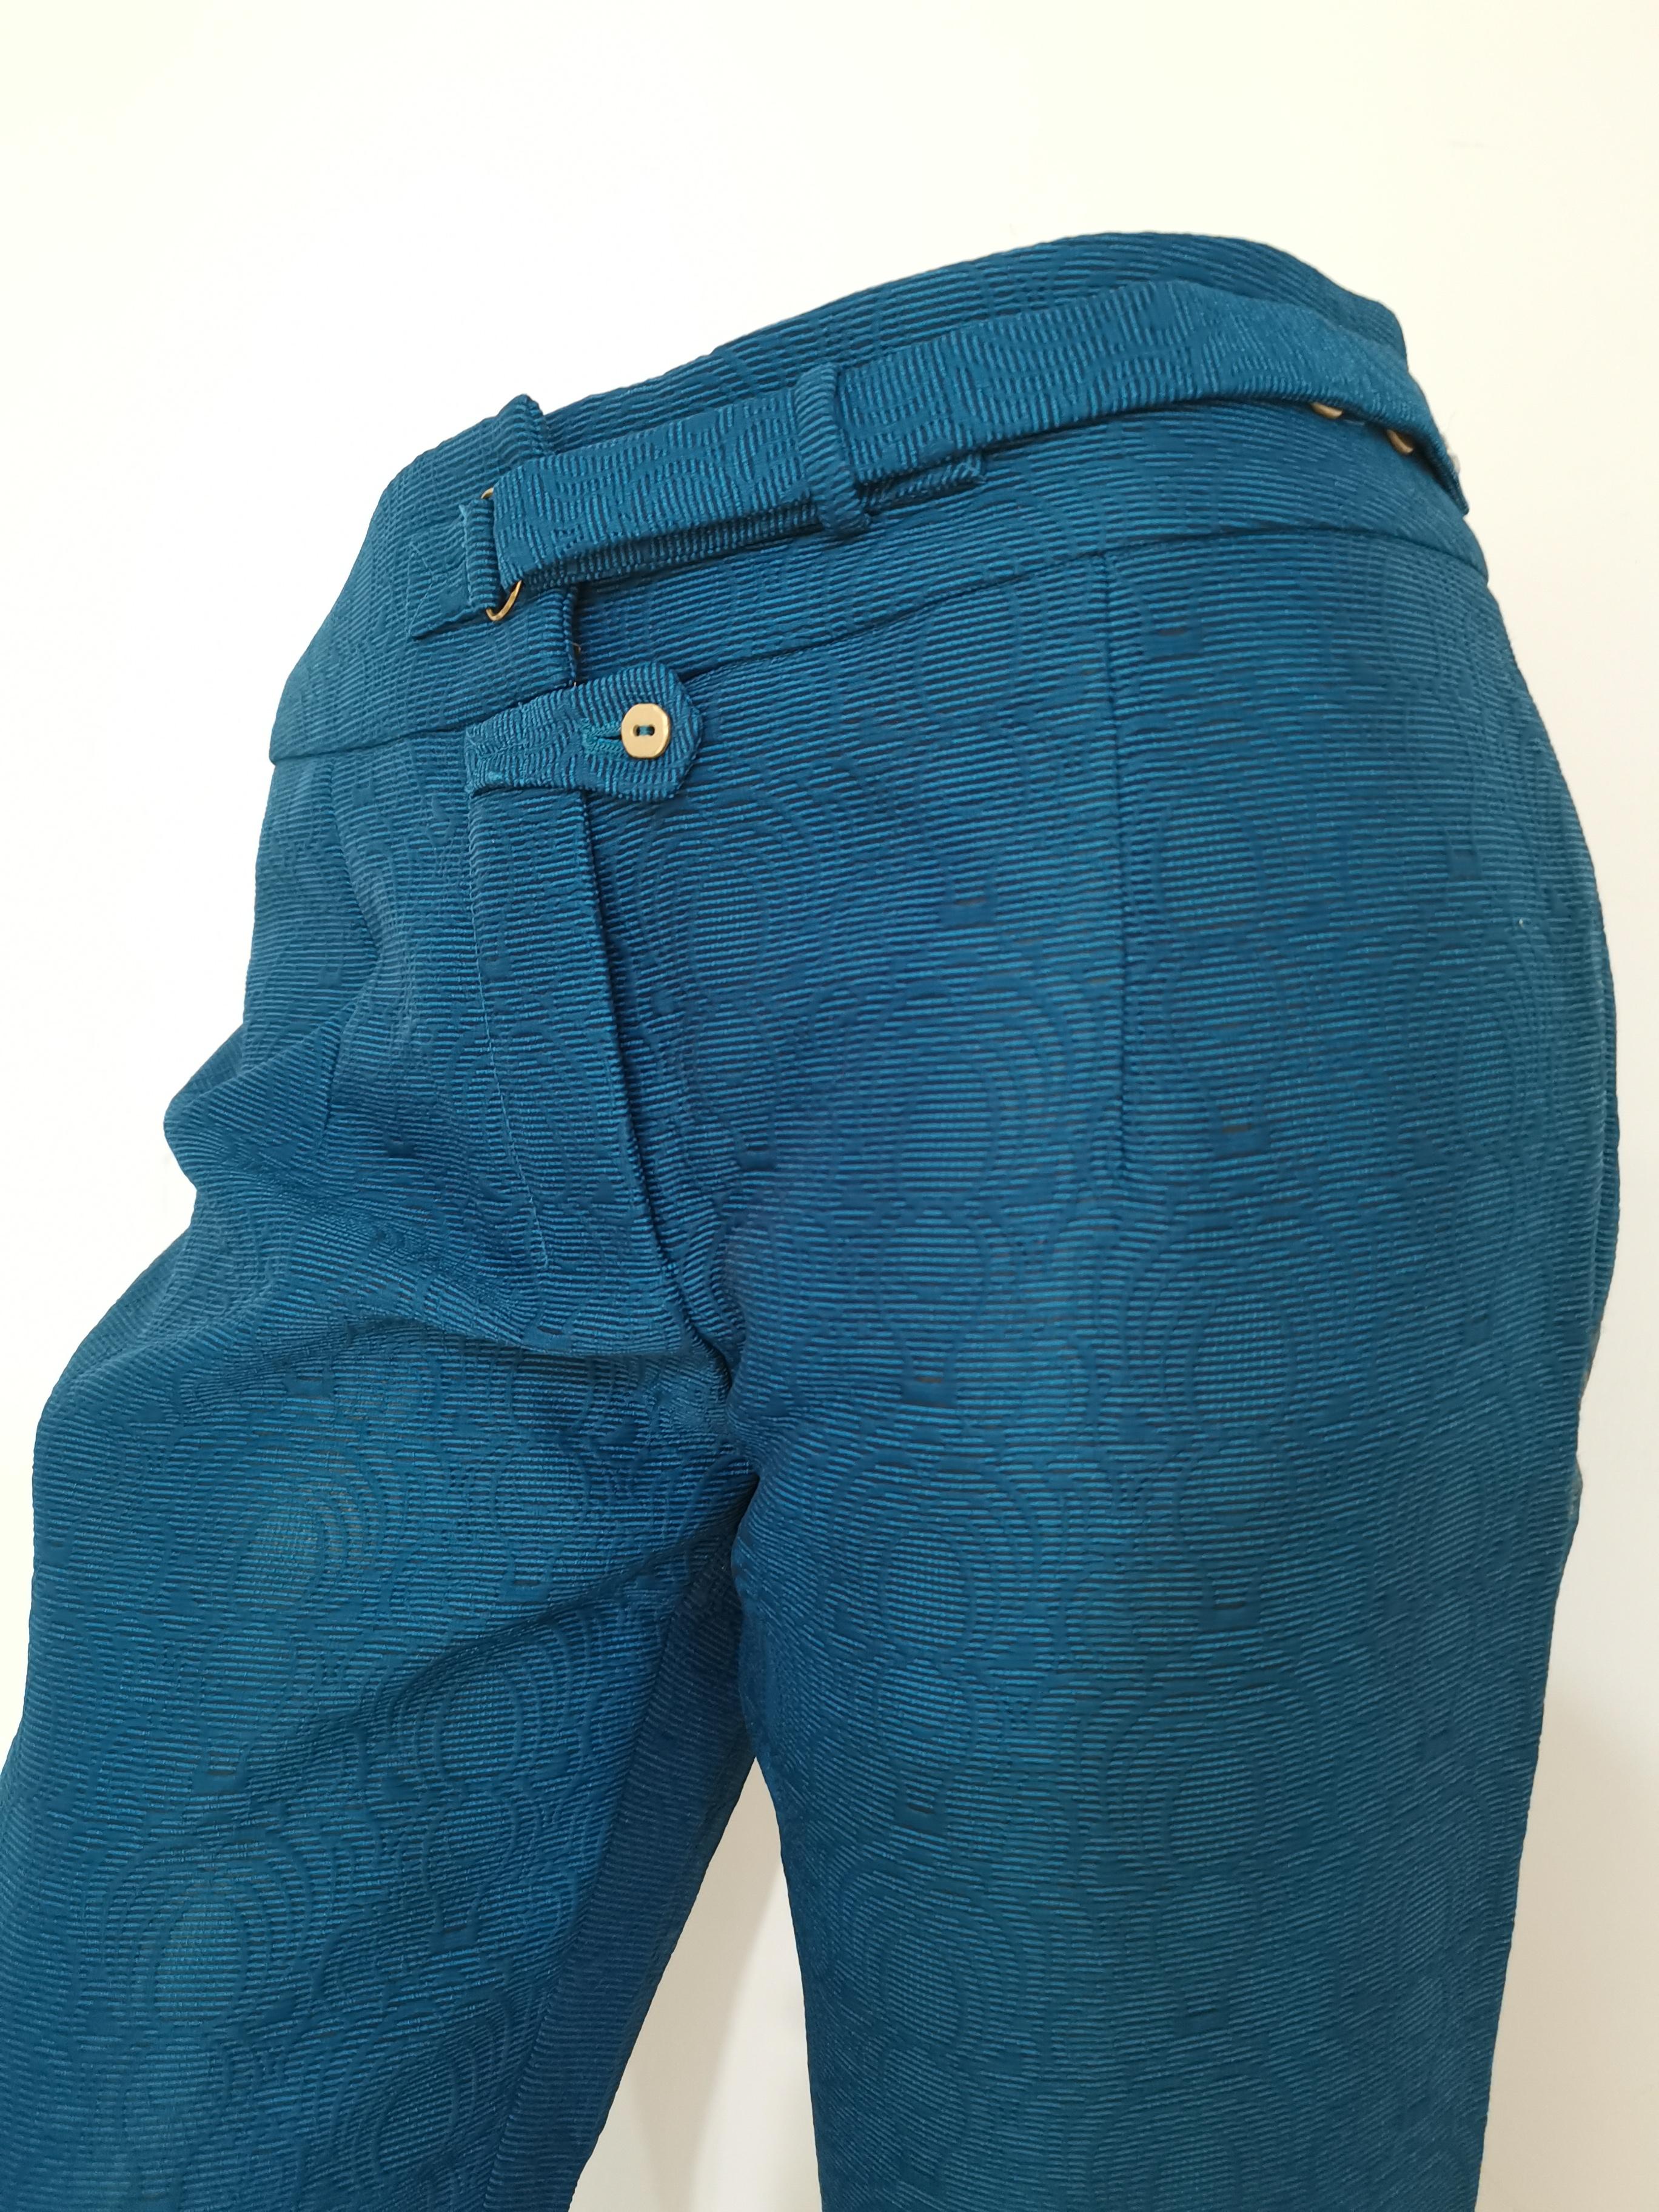 2012 Yves Saint Laurent blu pants NWOT For Sale 8